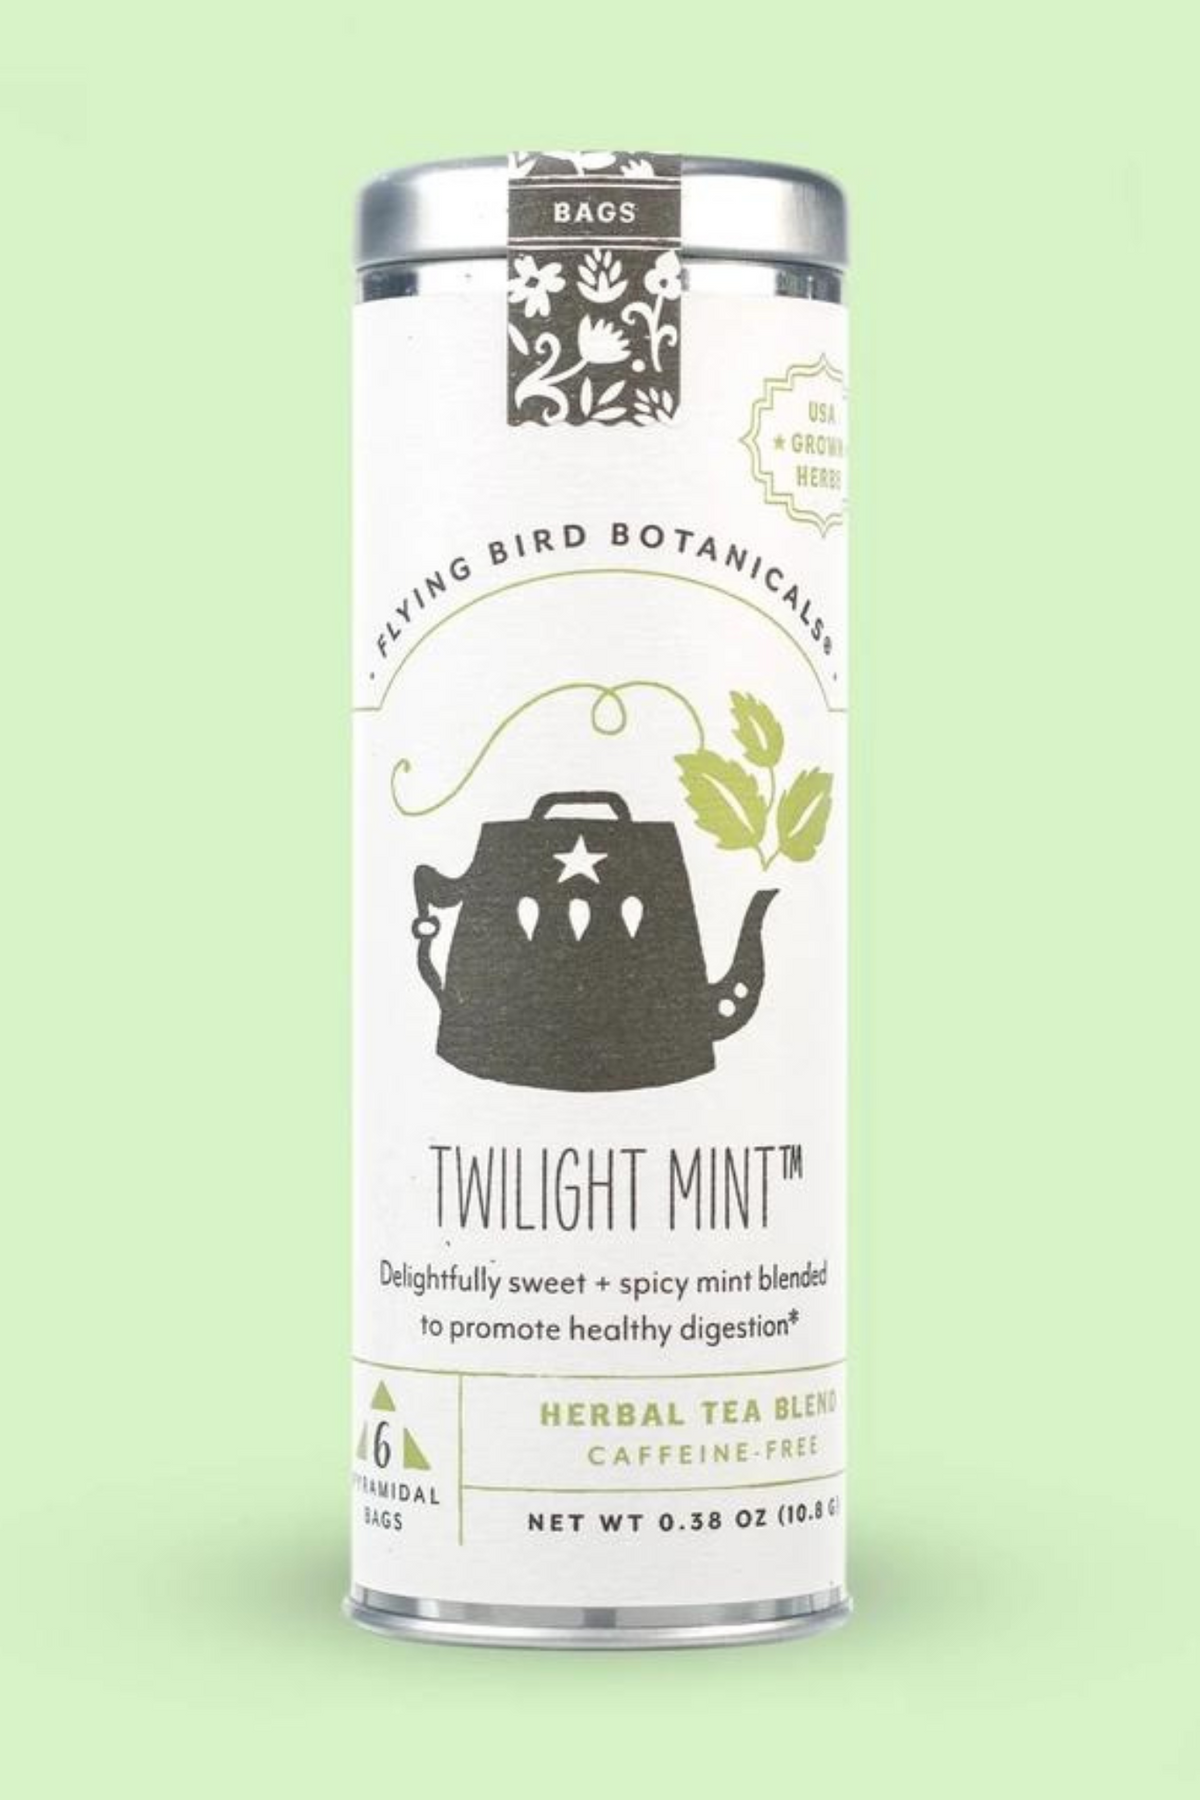 Flying Bird Botanicals Twilight Mint Tea